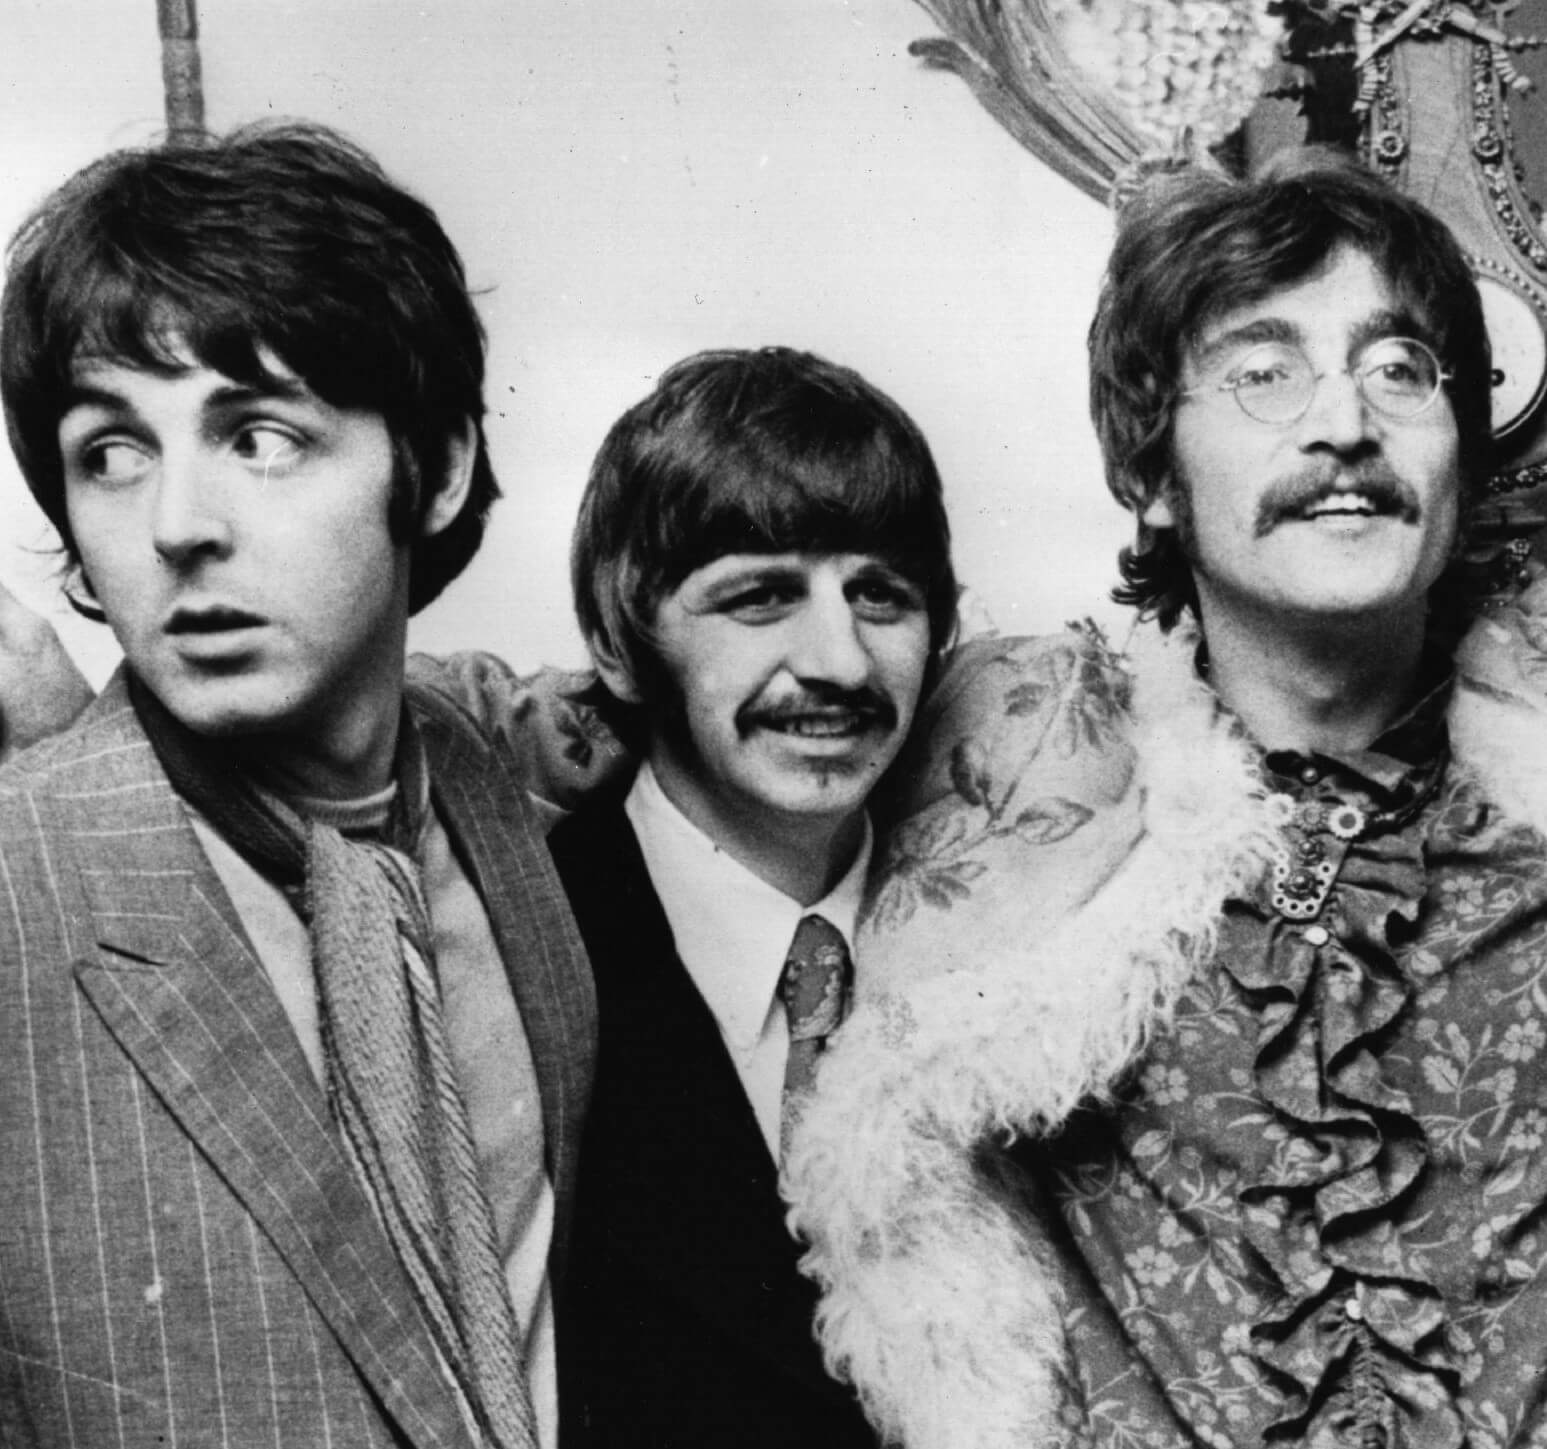 Paul McCartney, Ringo Starr, and John Lennon during The Beatles' 'Magical Mystery Tour' era